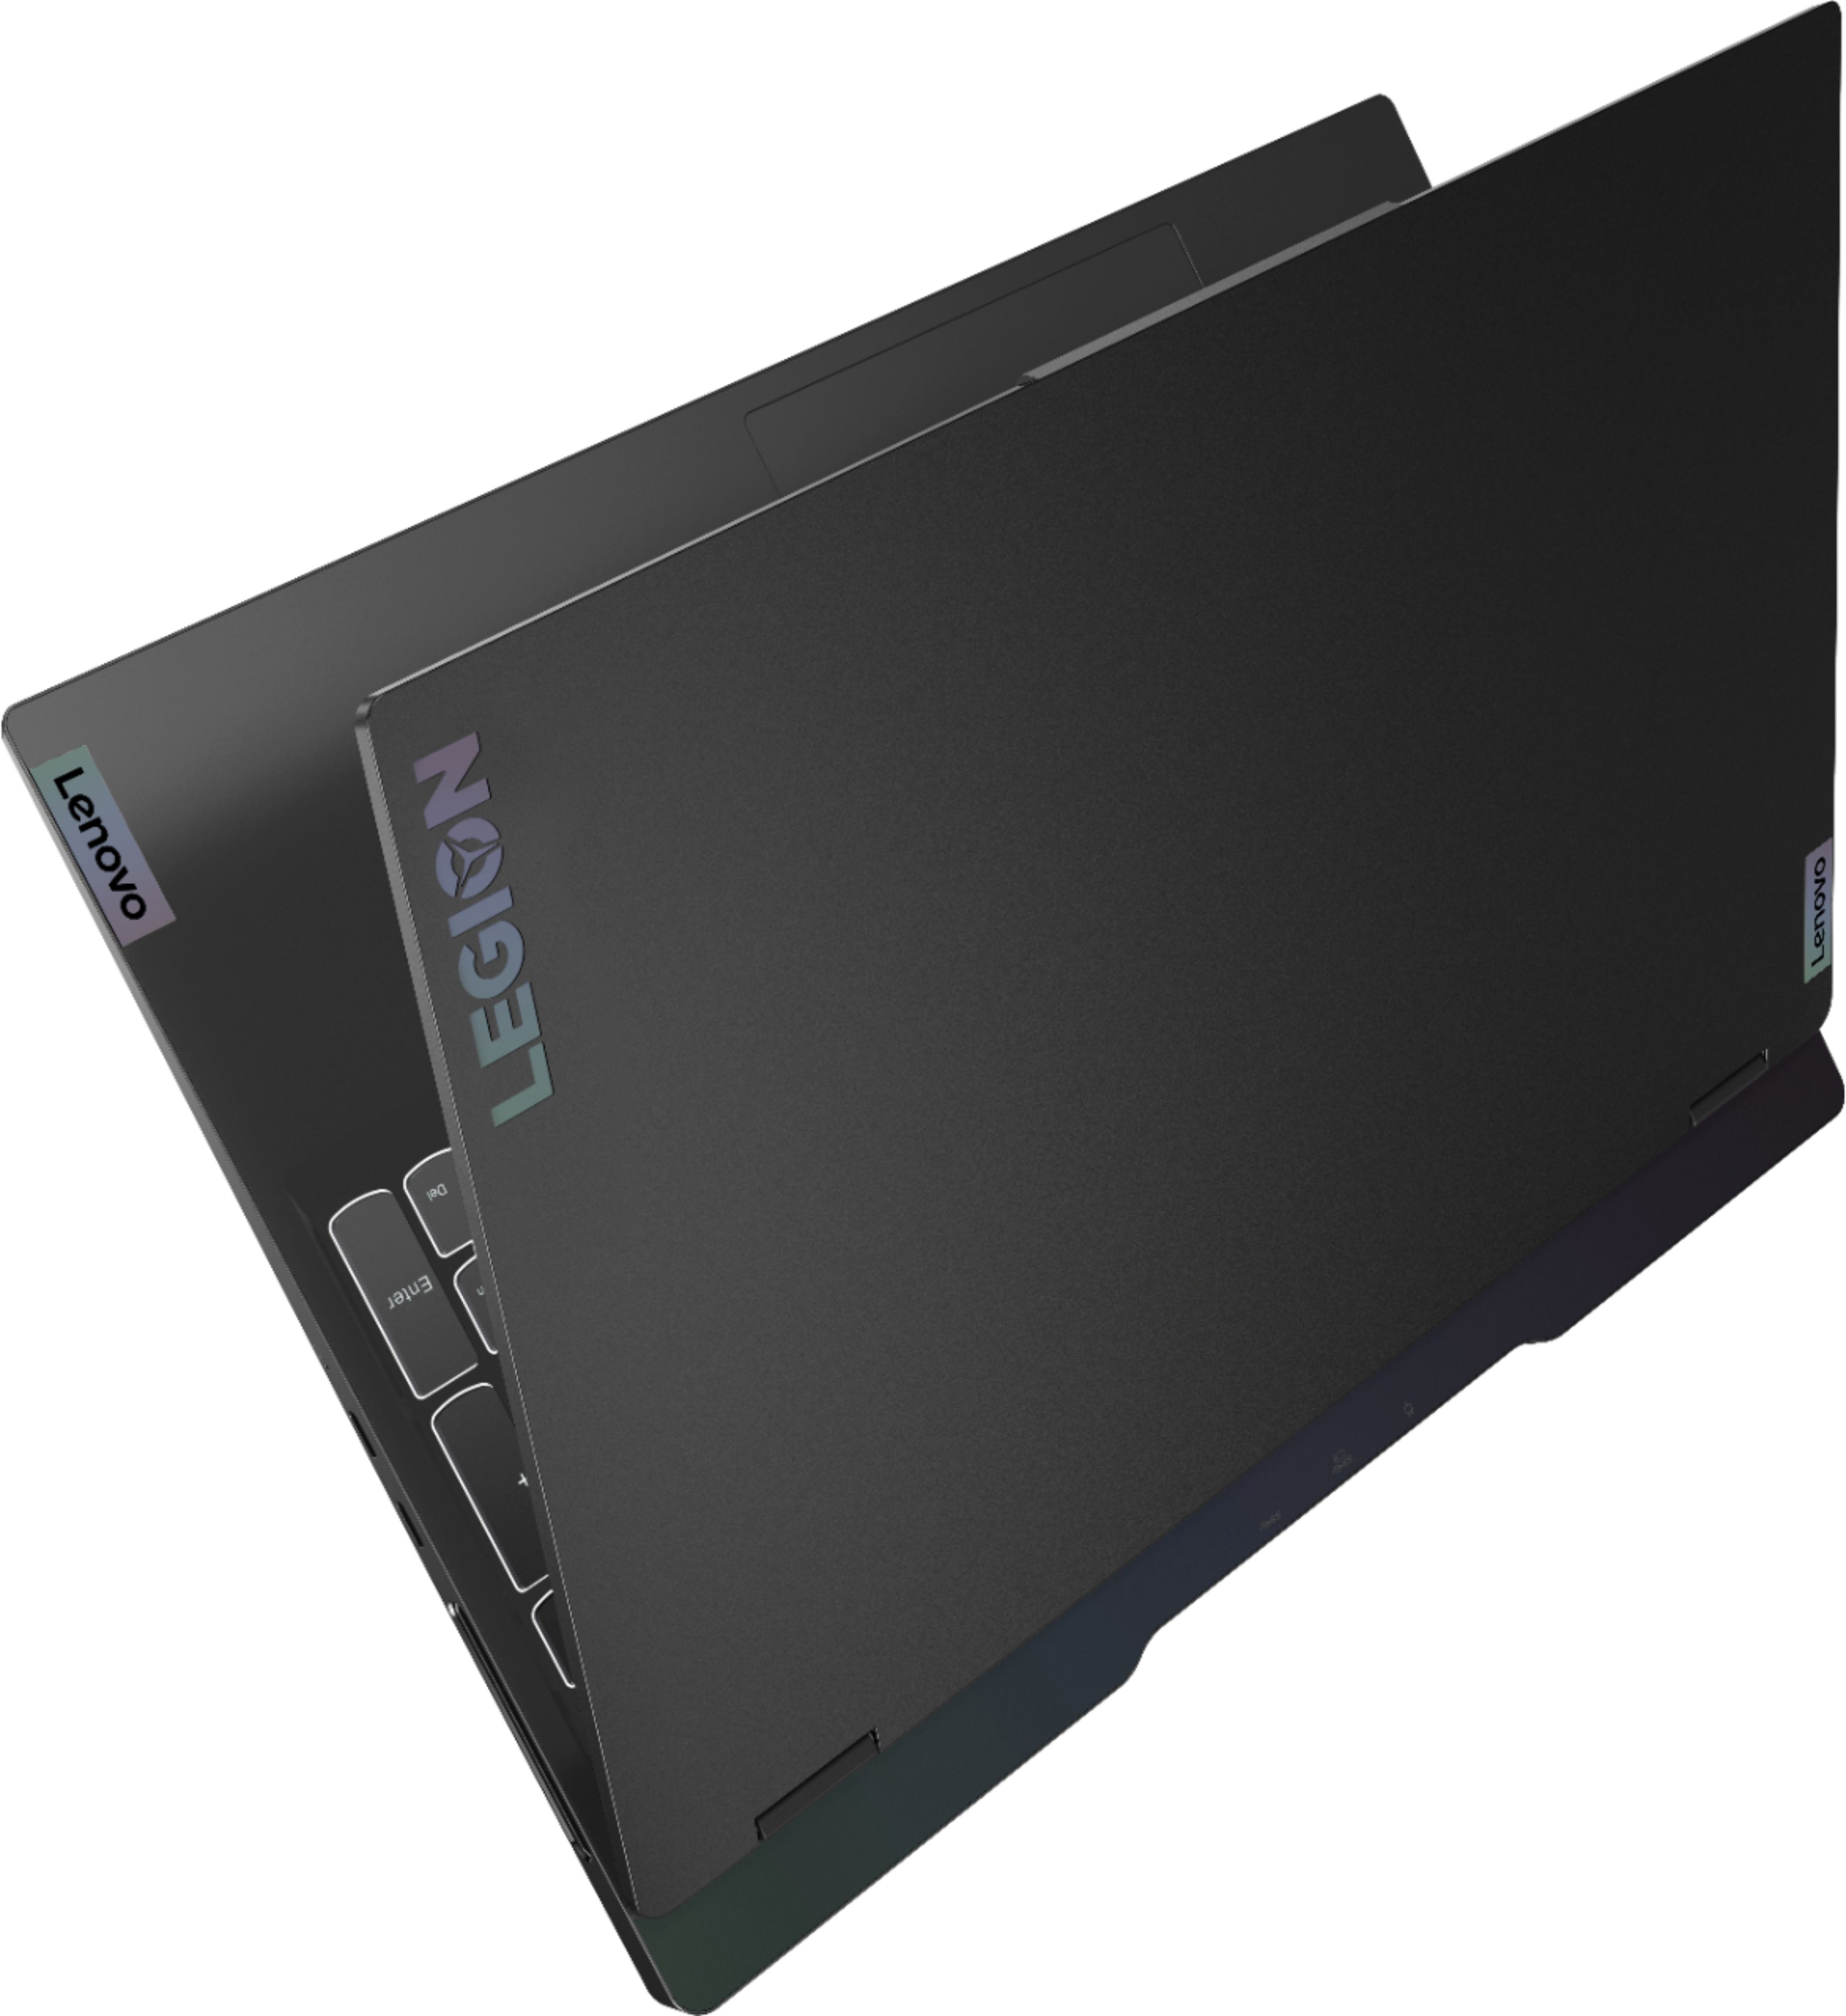 New Lenovo Legion 7 and Slim 7 Laptops Pair Brawn with Beauty